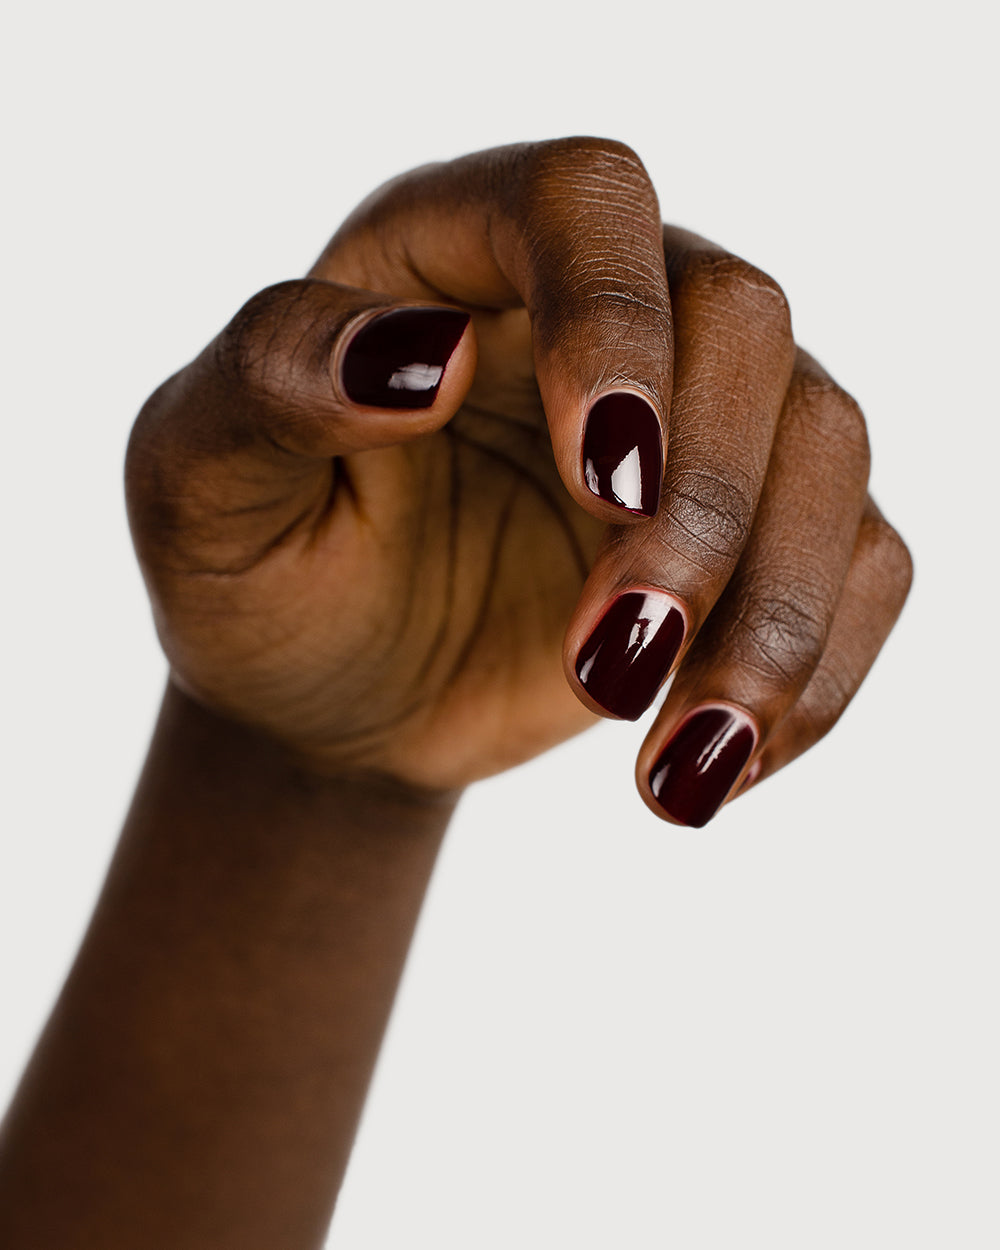 Magenta plum nail polish hand swatch on dark skin tone